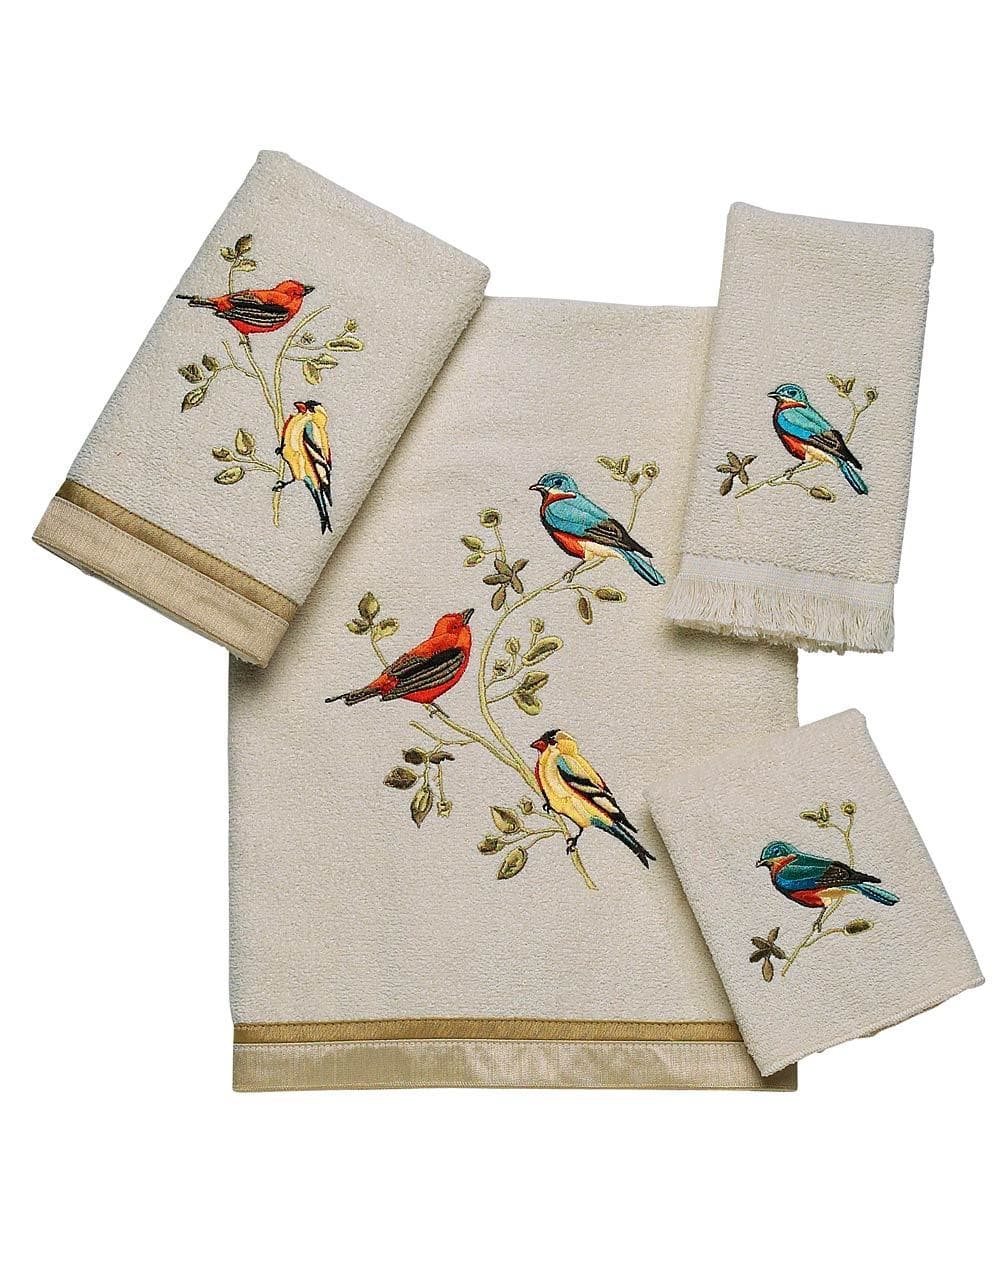 AVANTI GLIDED BIRDS HAND TOWEL-11984HT